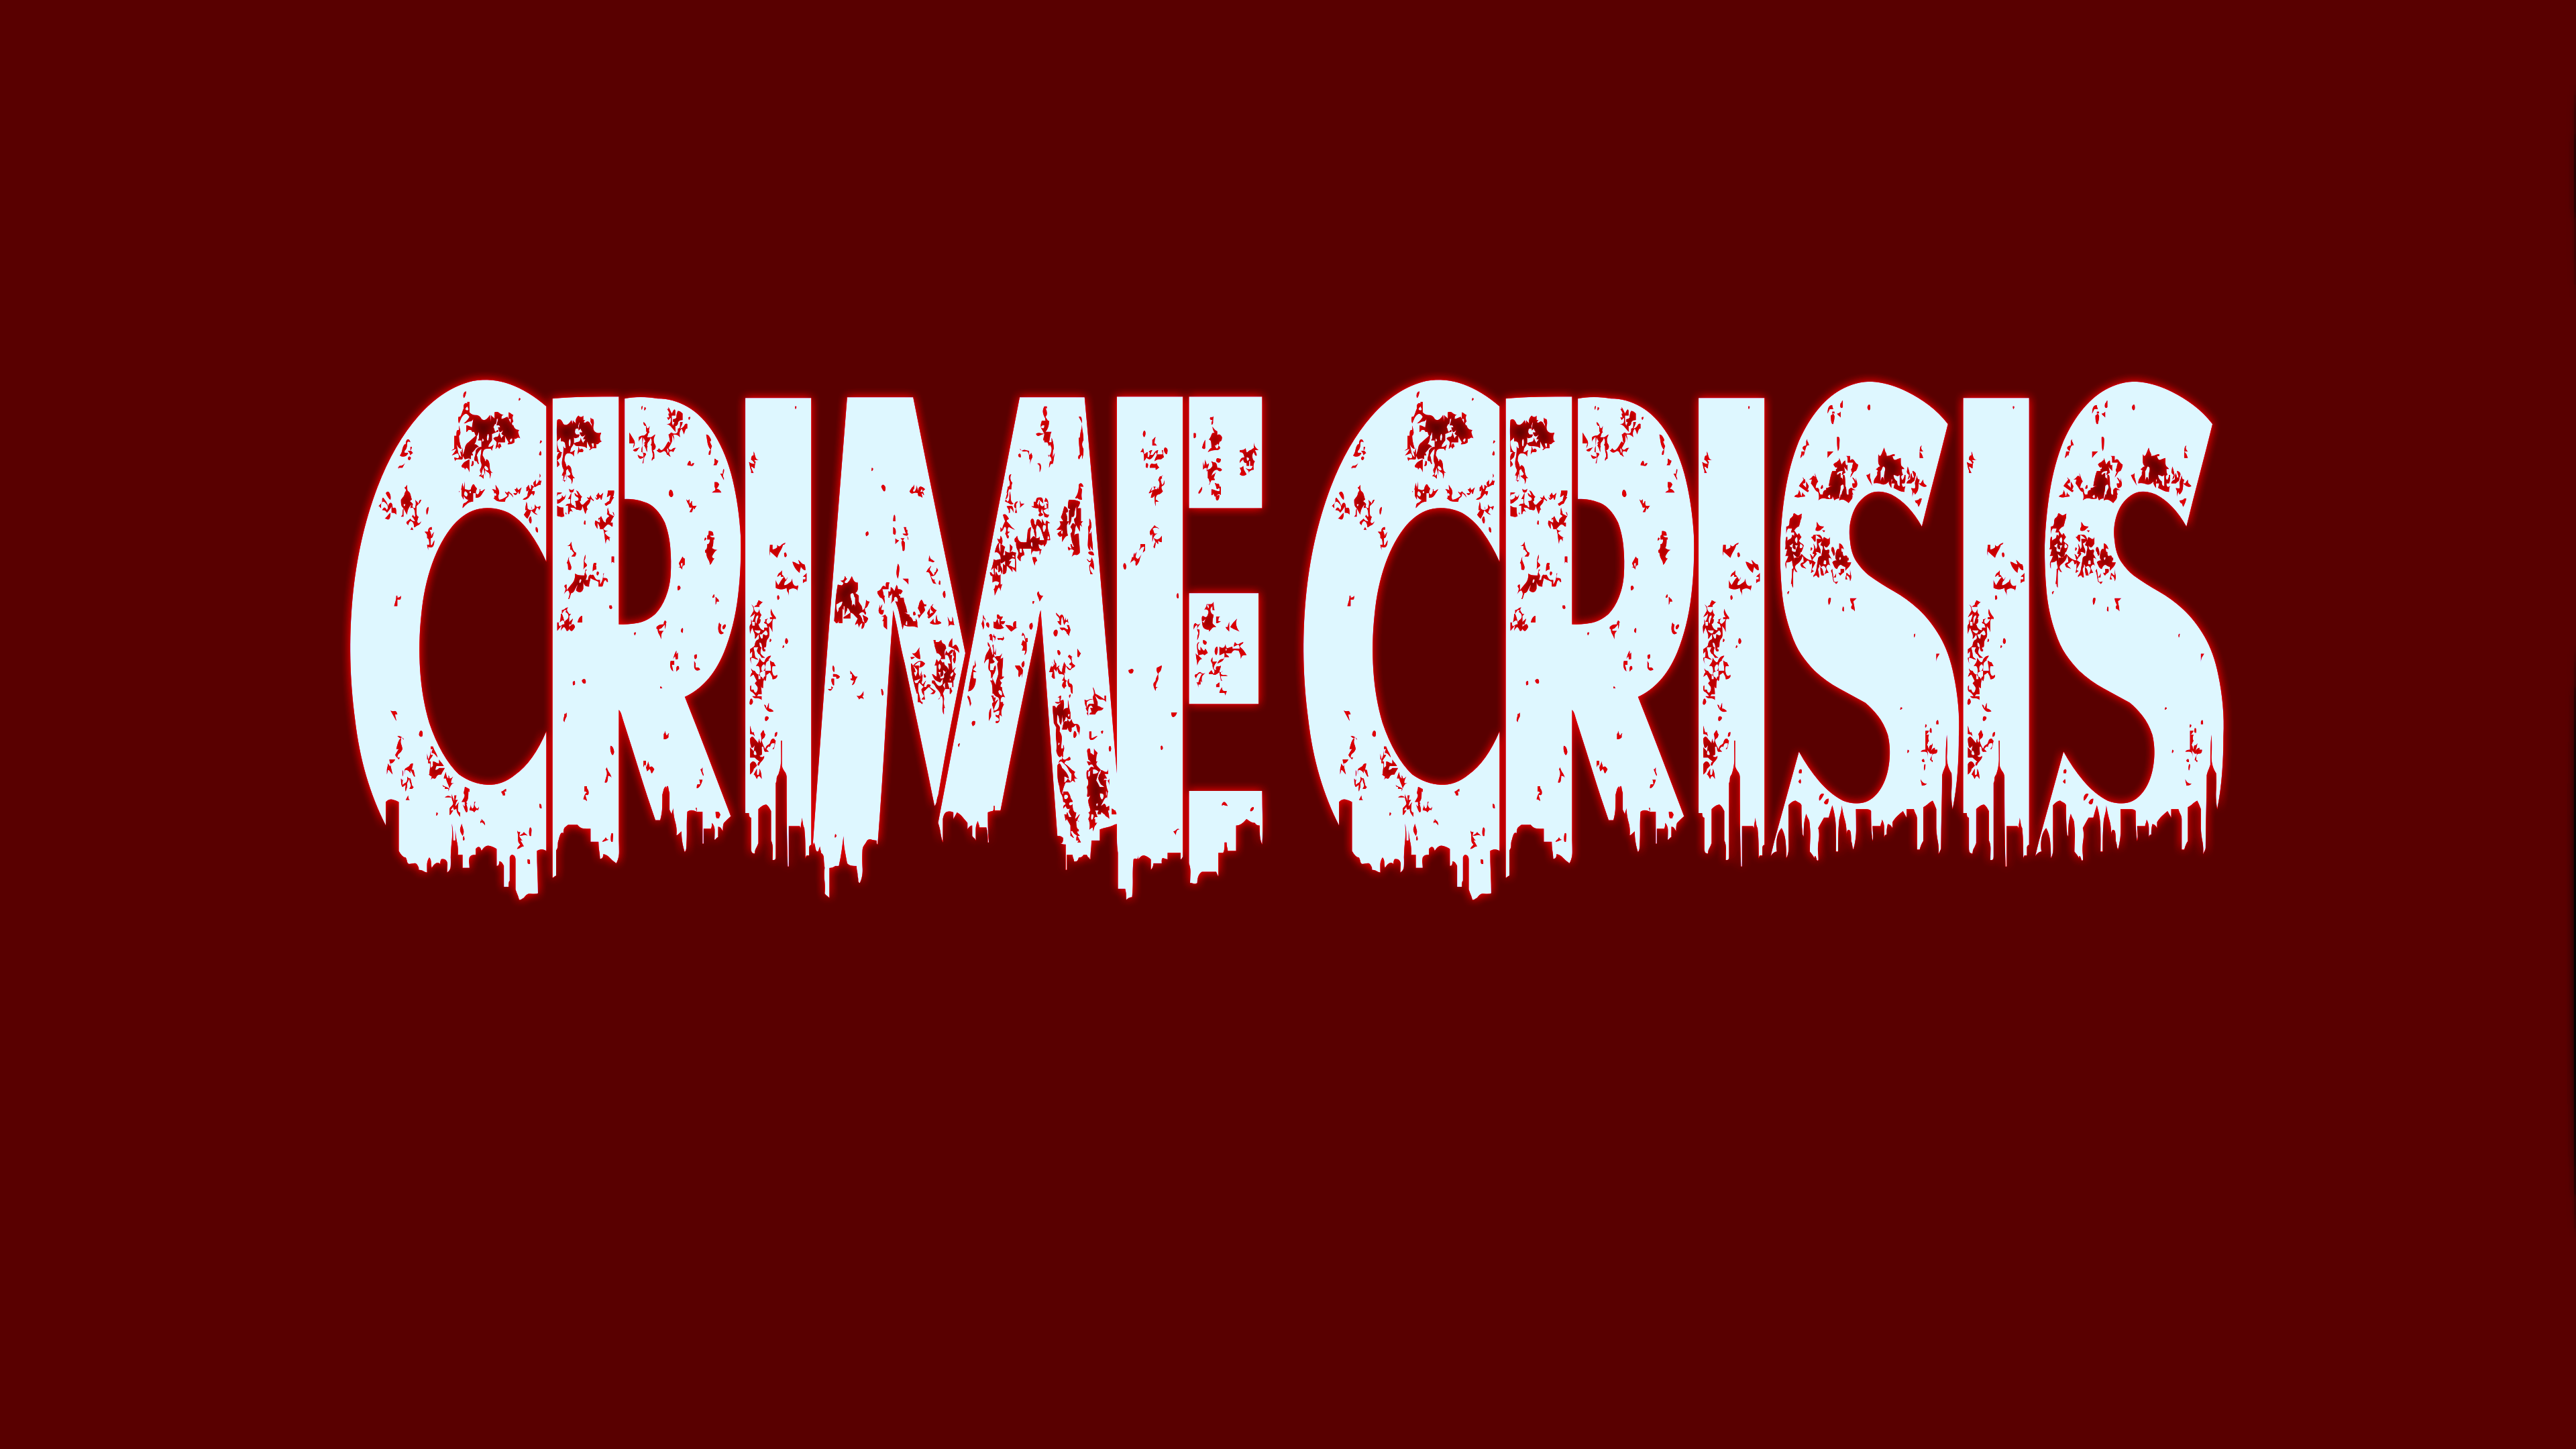 CRIME CRISIS